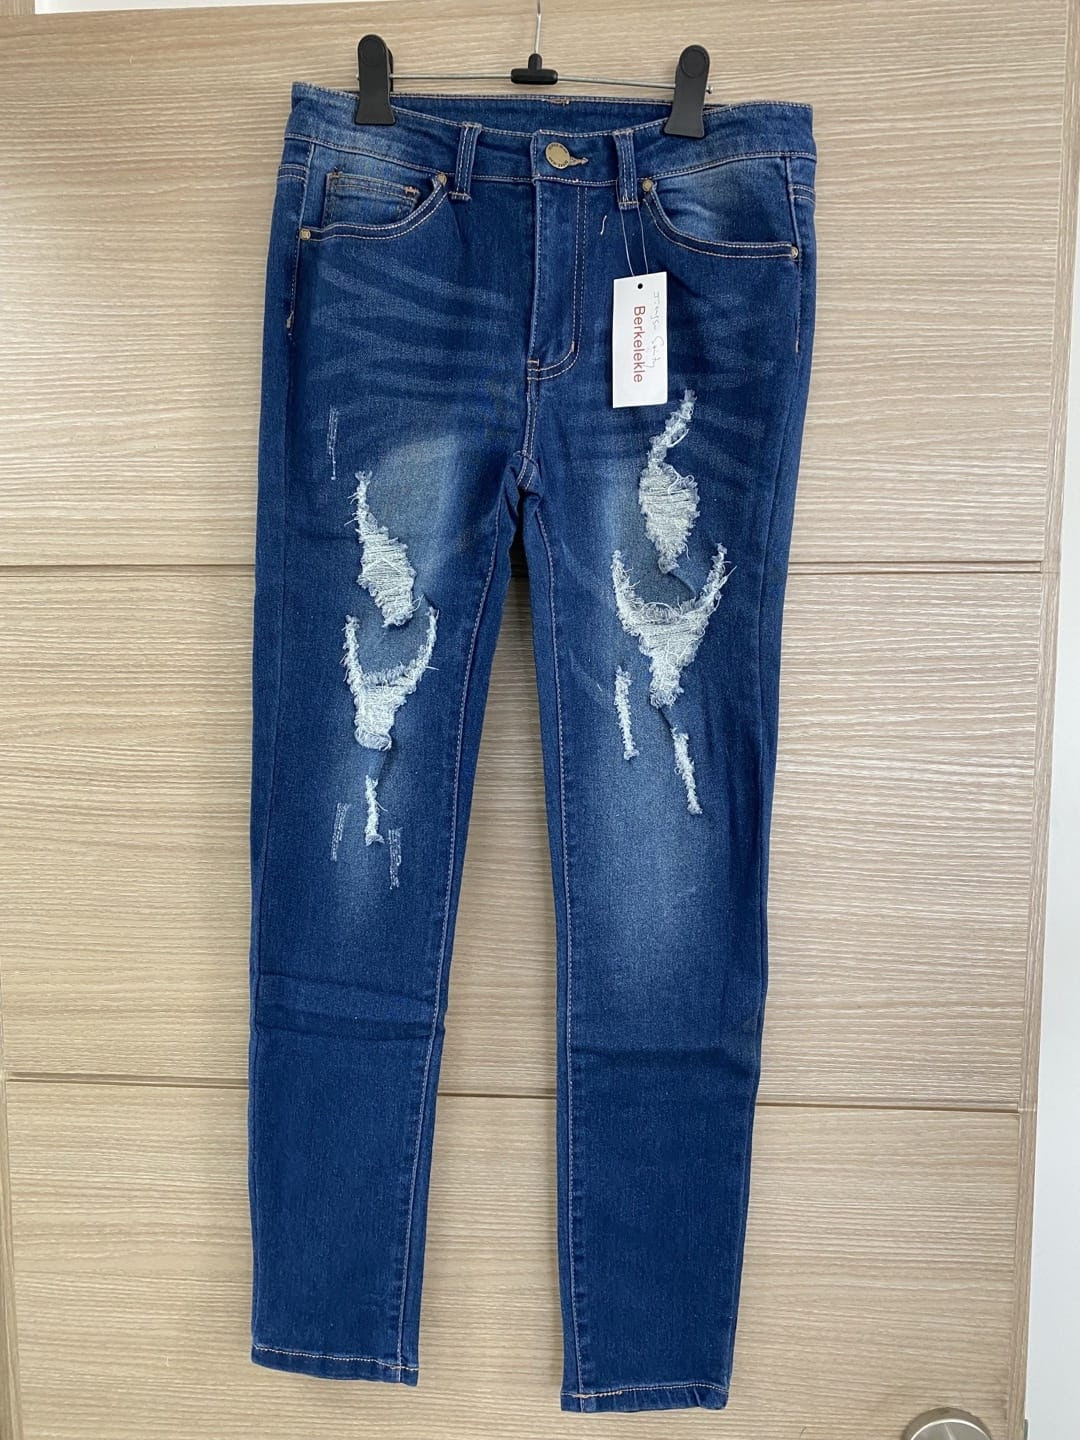 Womens Stretch Skinny Denim Jeans. 43,000pairs. EXW Los Angeles $4.75/pair.